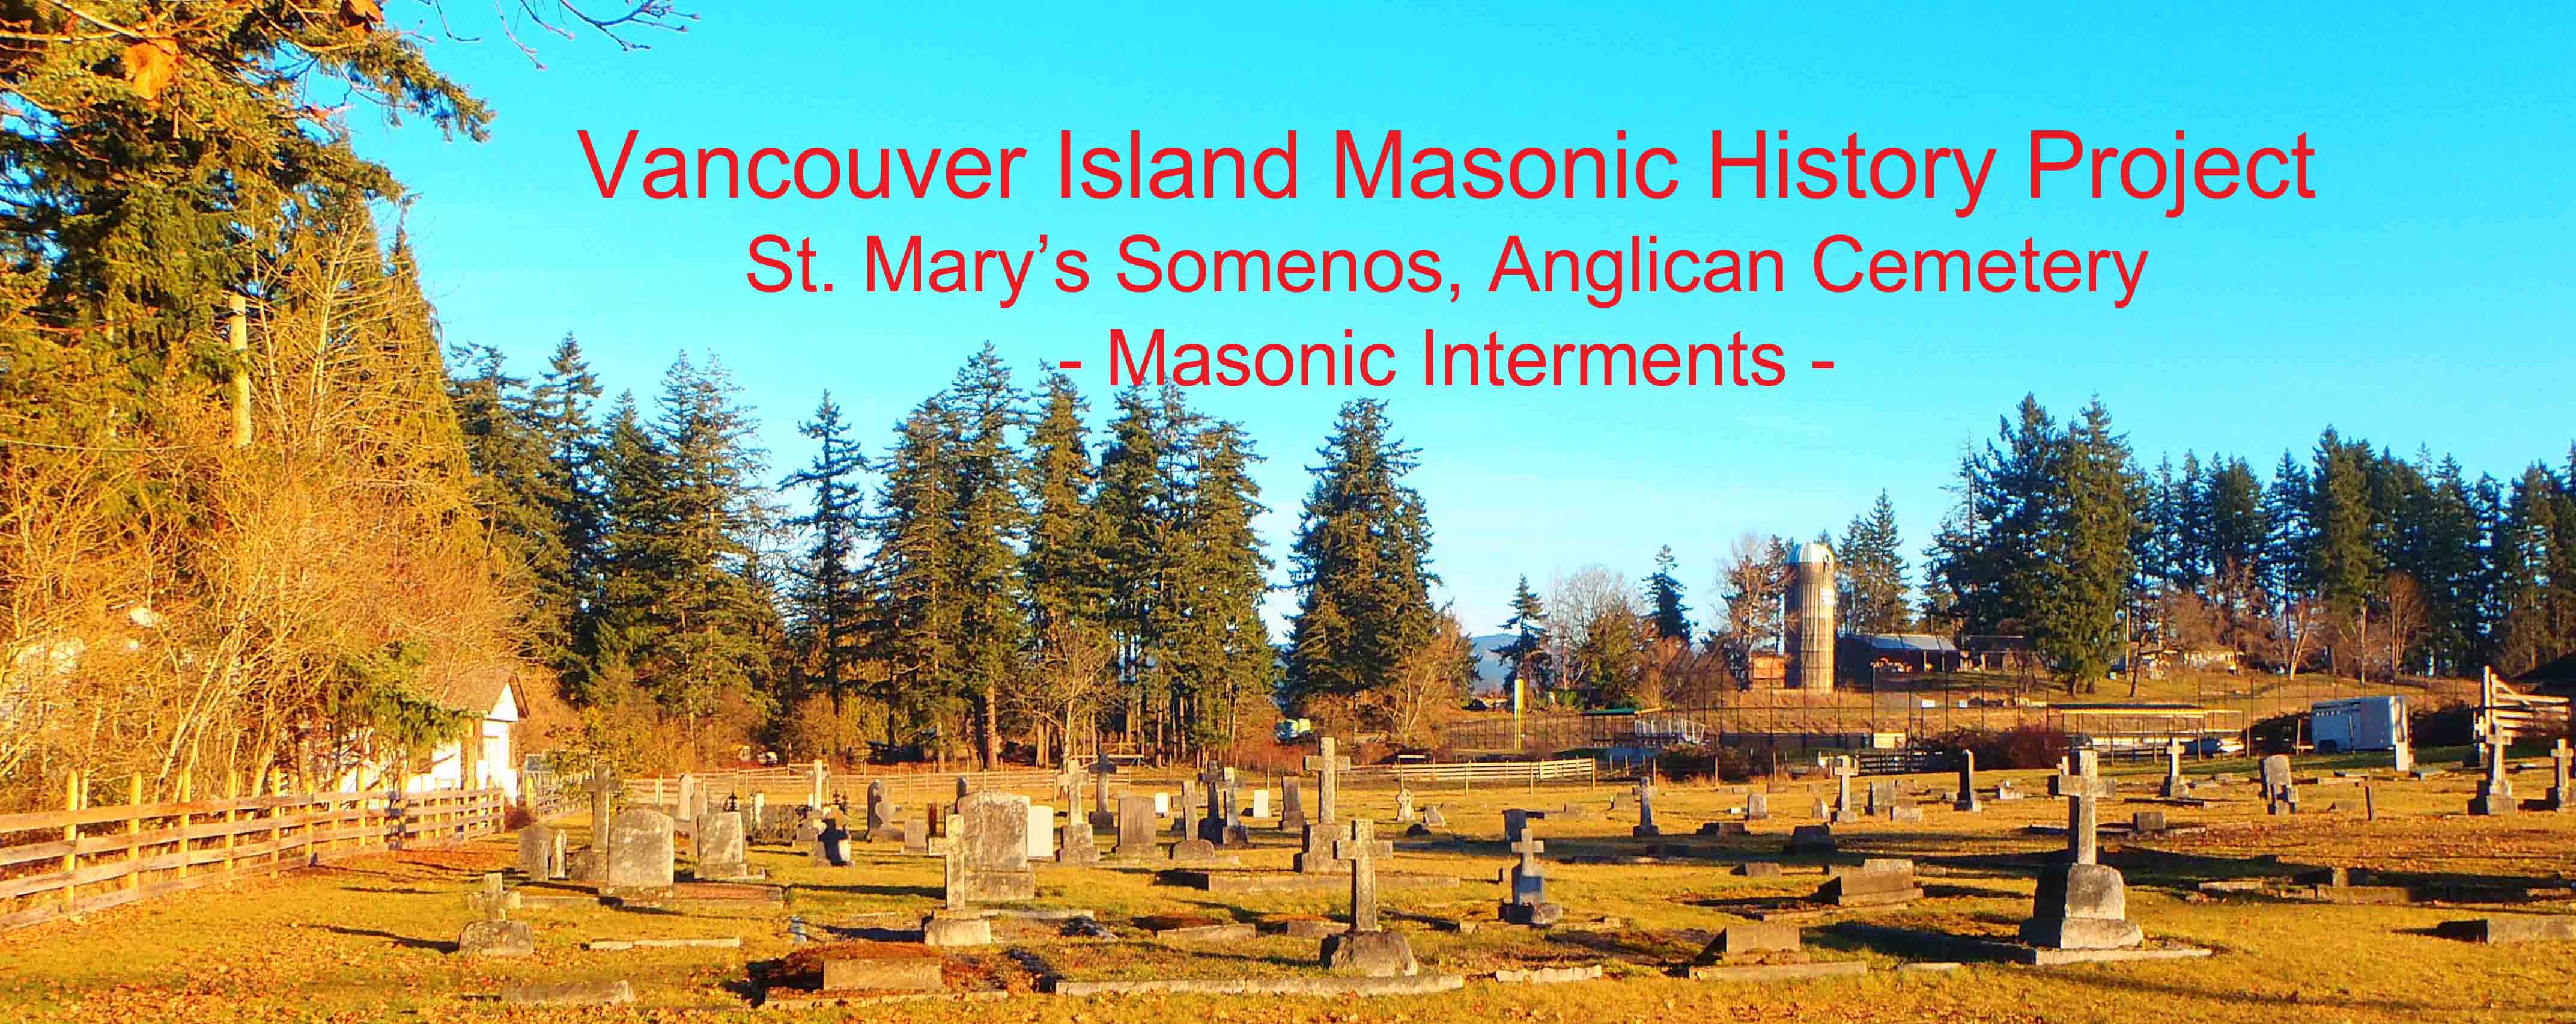 St. Mary's Somenos Anglican cemetery-Masonic Interments